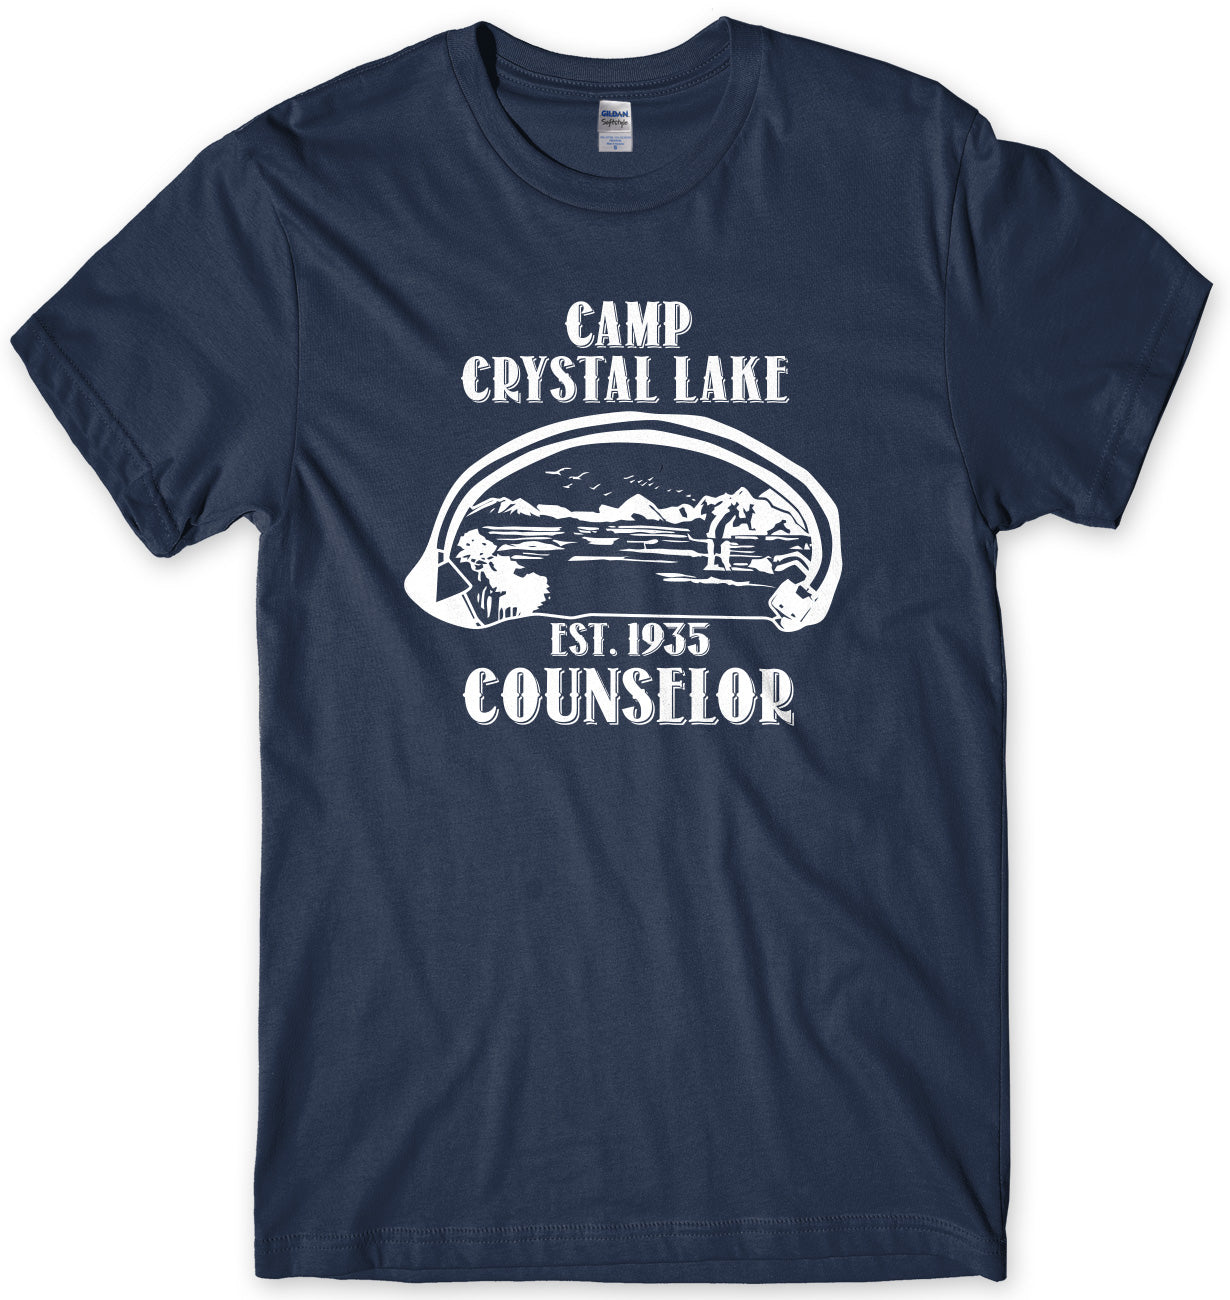 Camp Crystal Lake 1935 Counselor Mens T-Shirt - StreetSide Surgeons